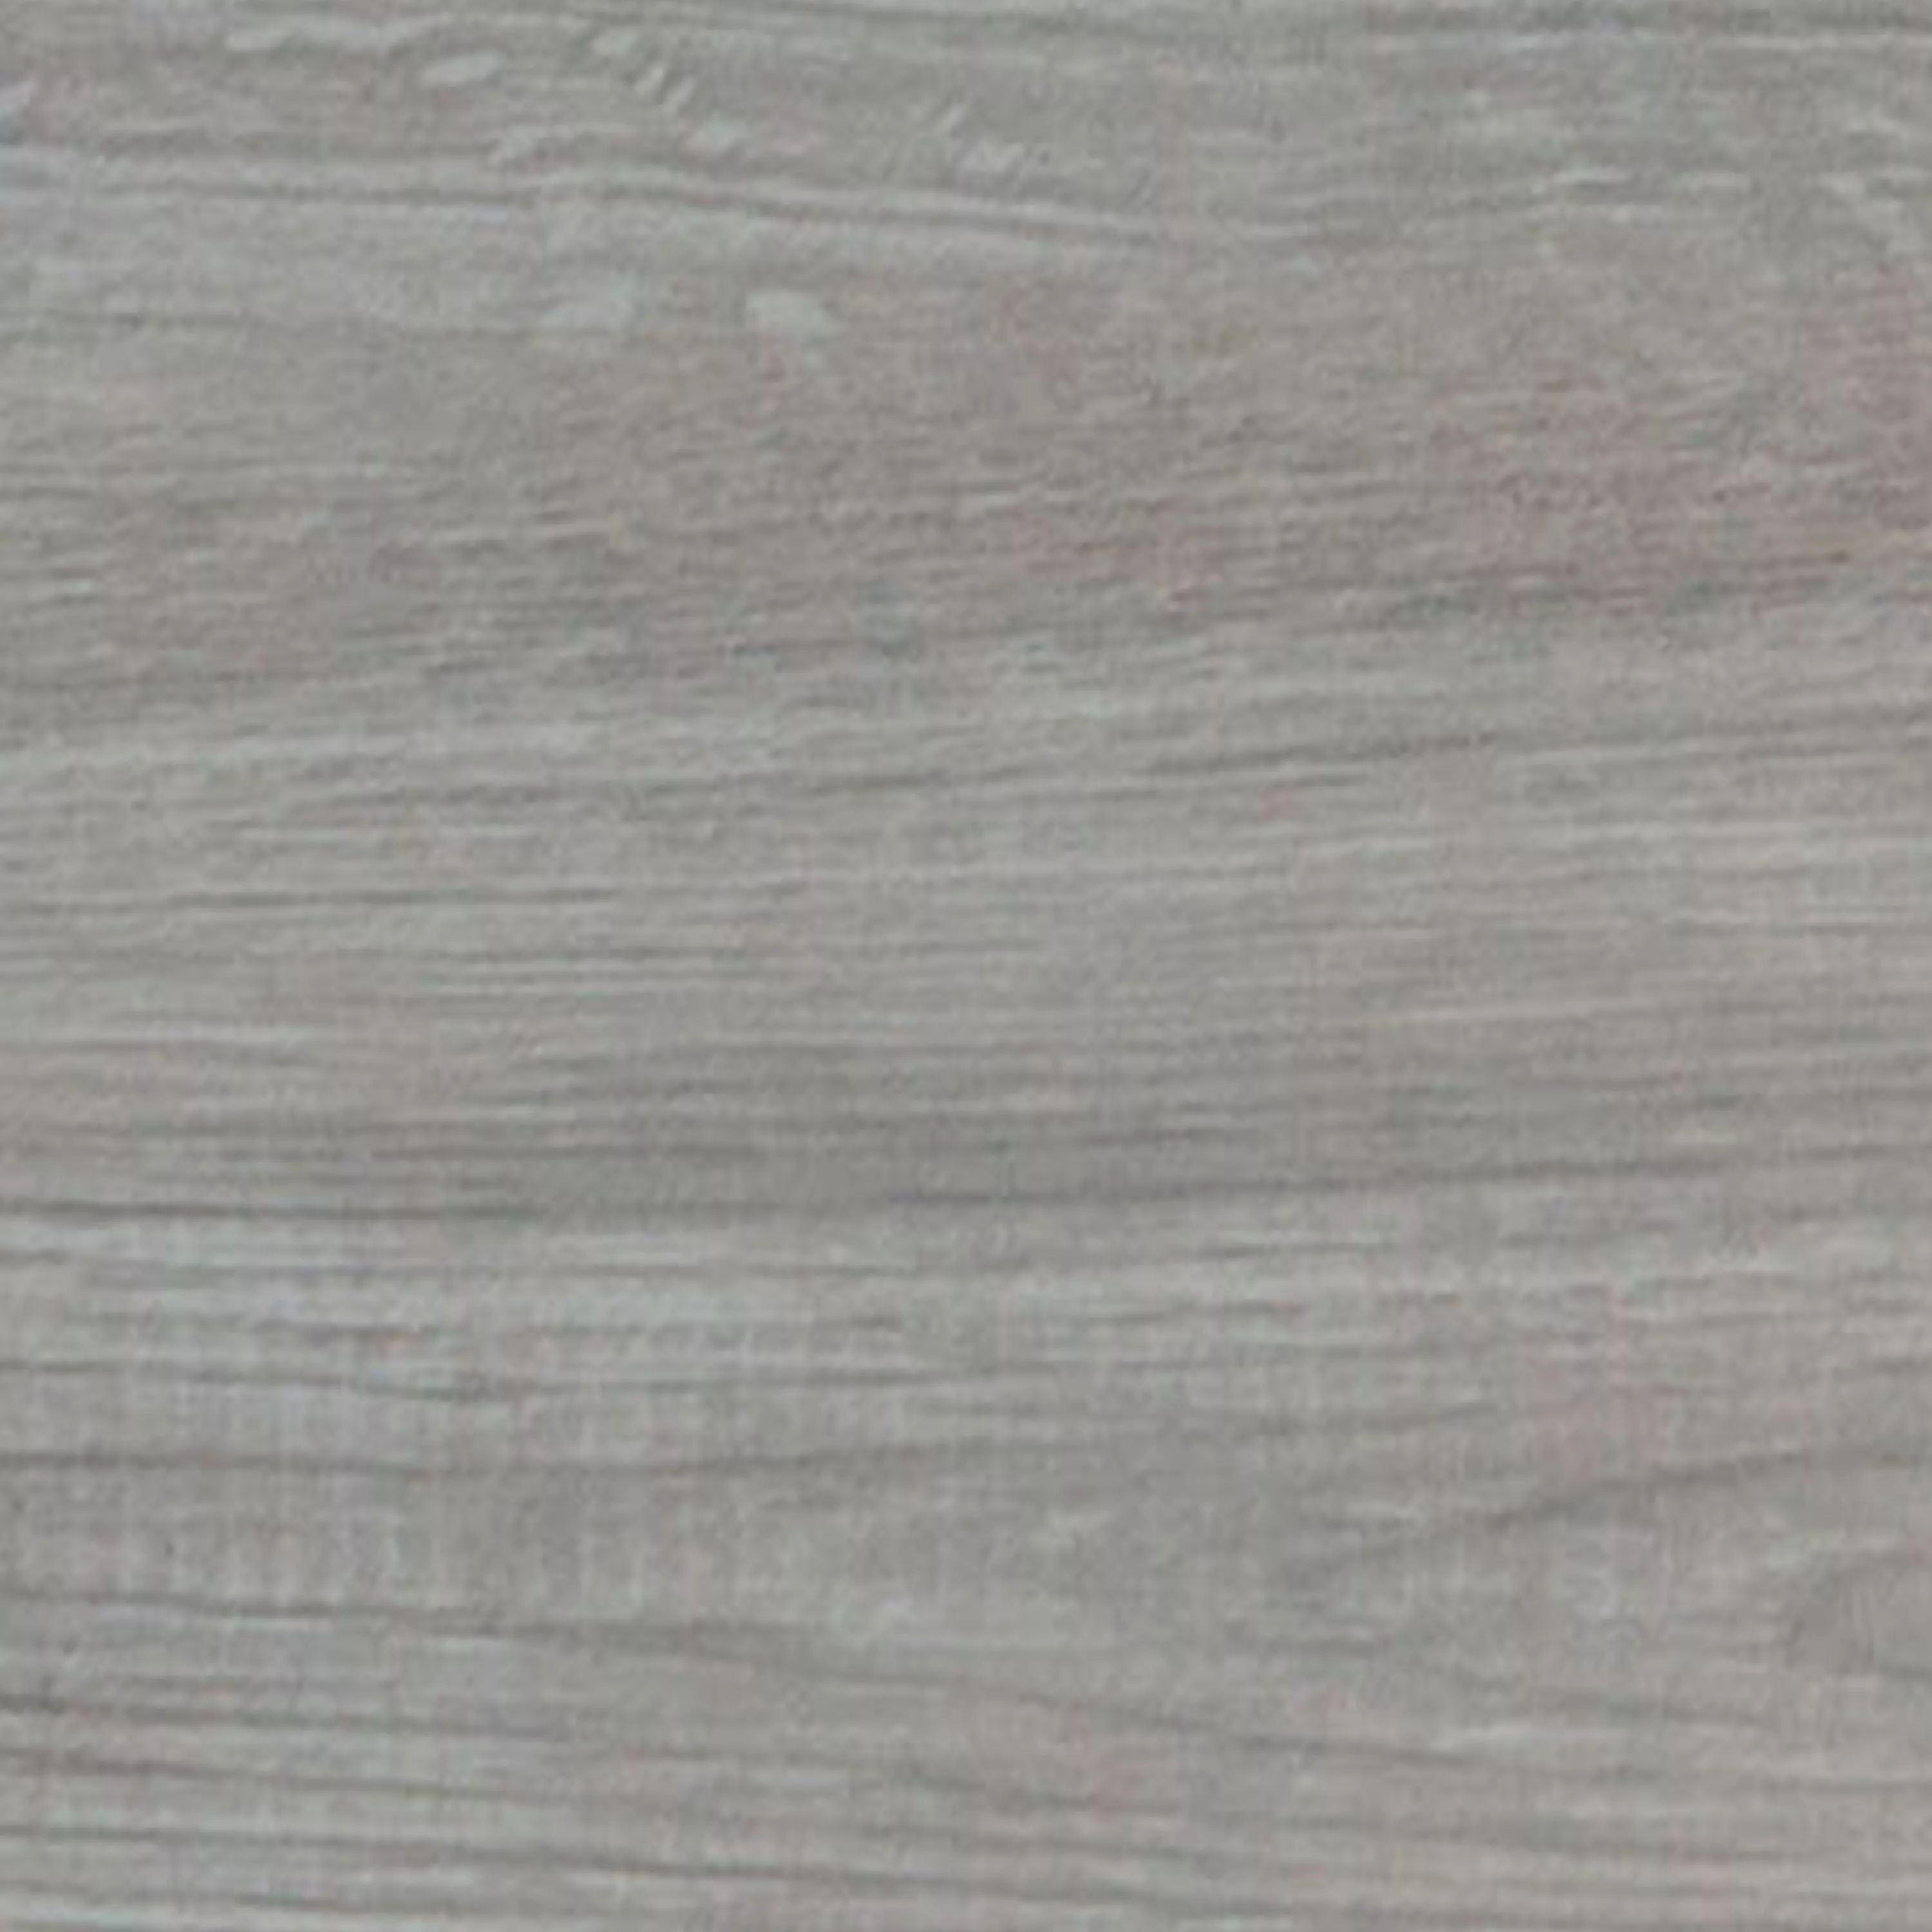 Floor Tiles Wood Optic Fullwood Beige 20x120cm 